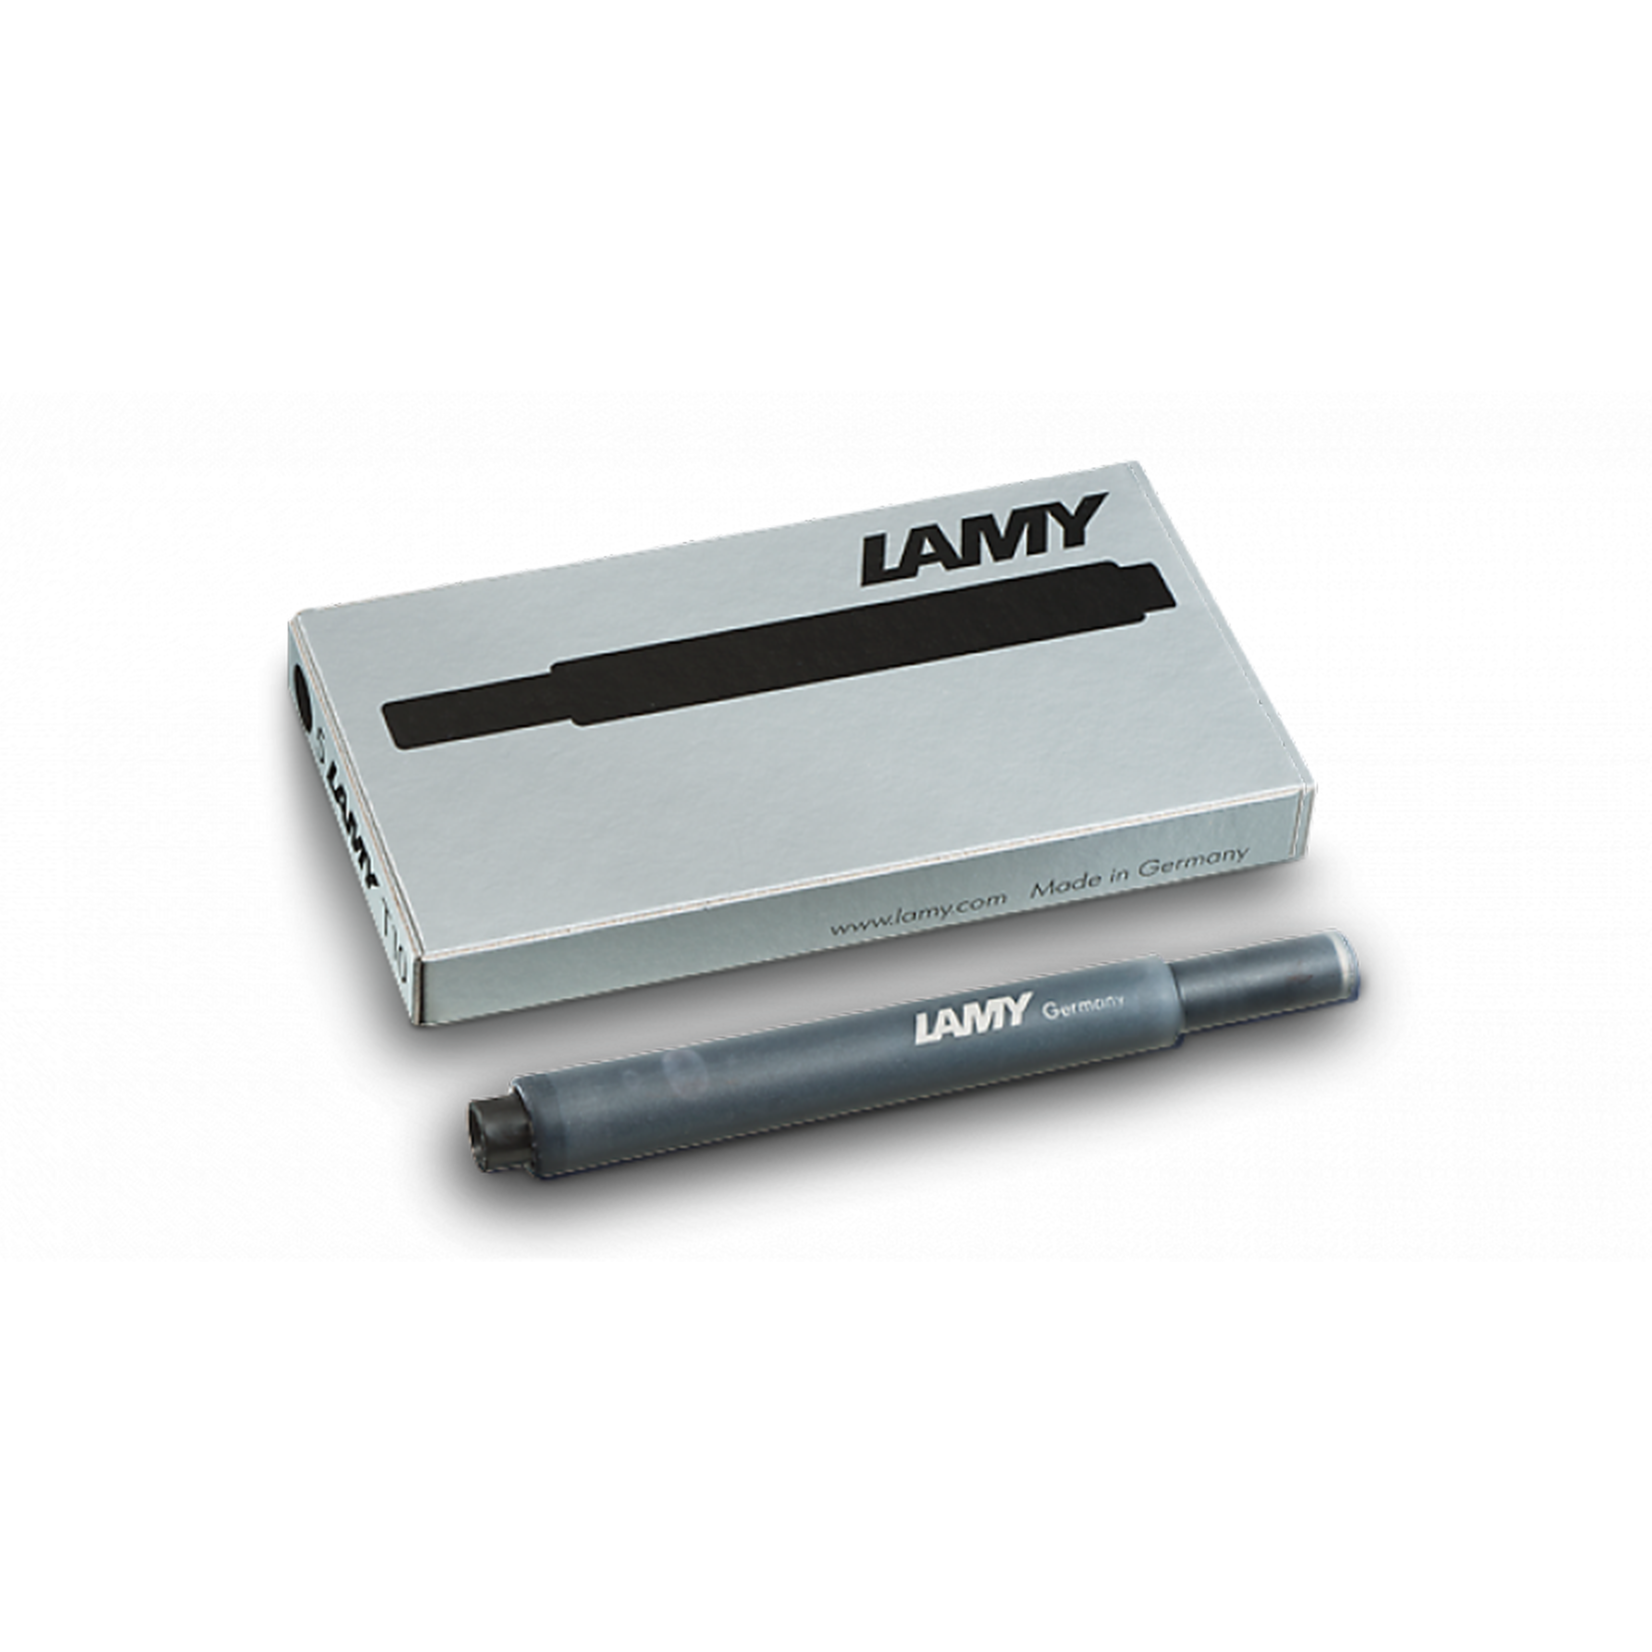 LAMY T10 Refill - Fountain Pen Ink Cartridges, Box of 5 (Black)